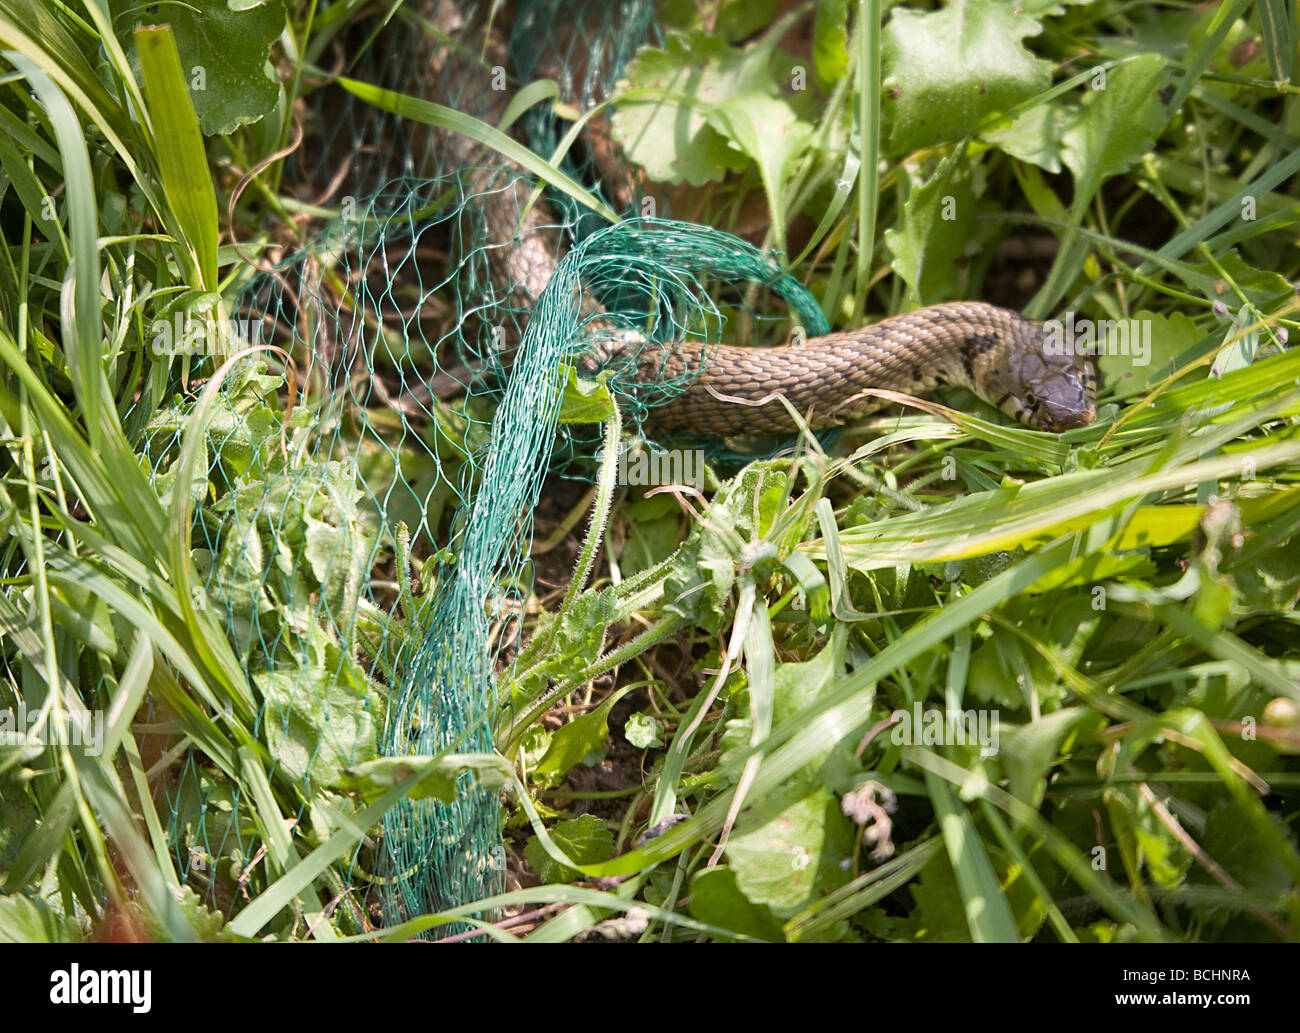 Grass snake, Natrix natris, caught in netting Stock Photo